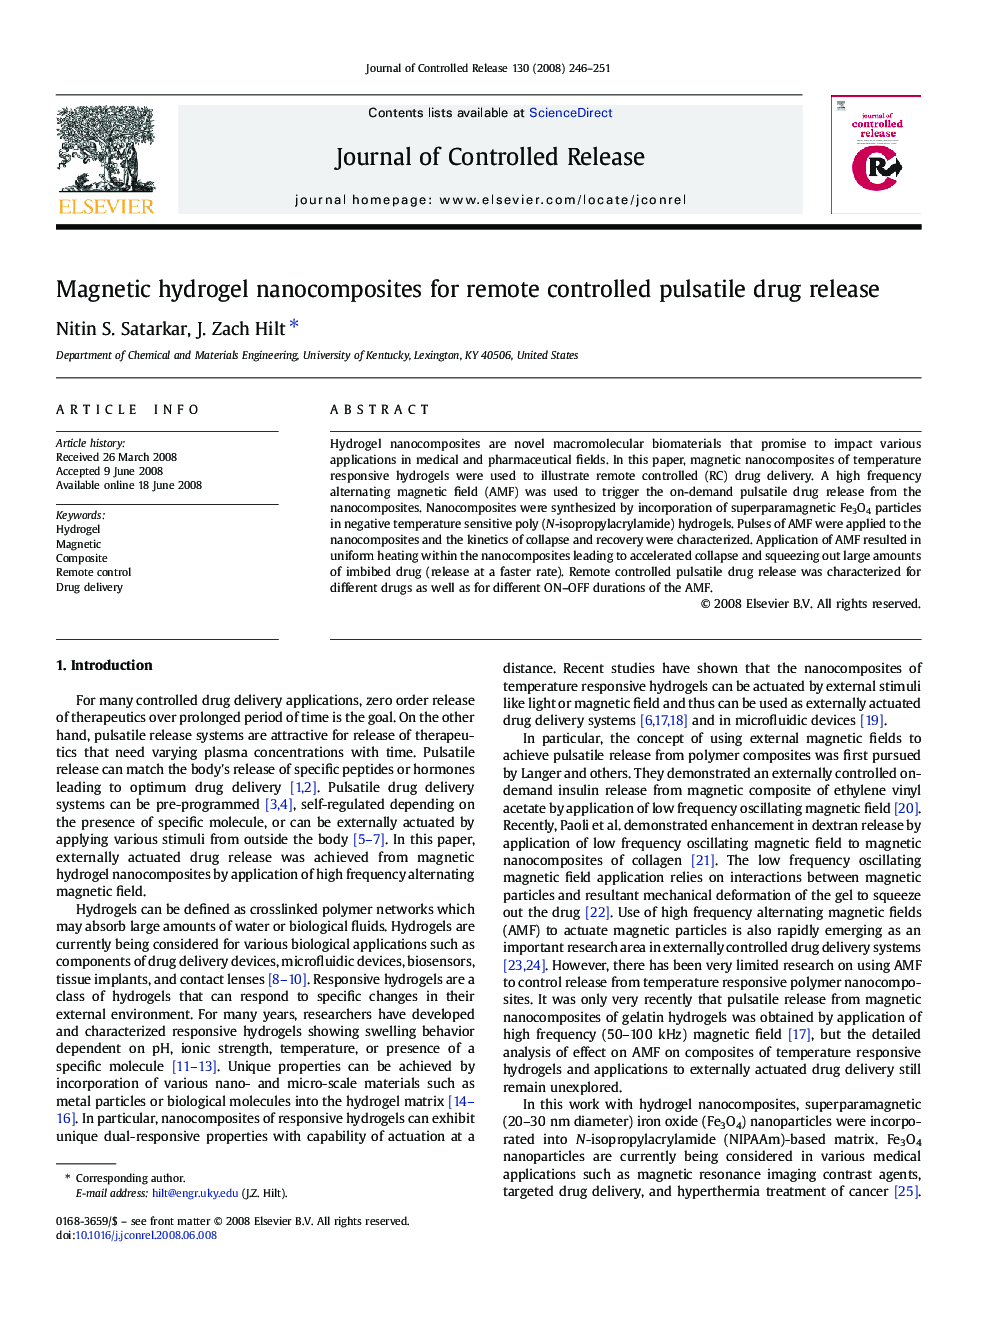 Magnetic hydrogel nanocomposites for remote controlled pulsatile drug release